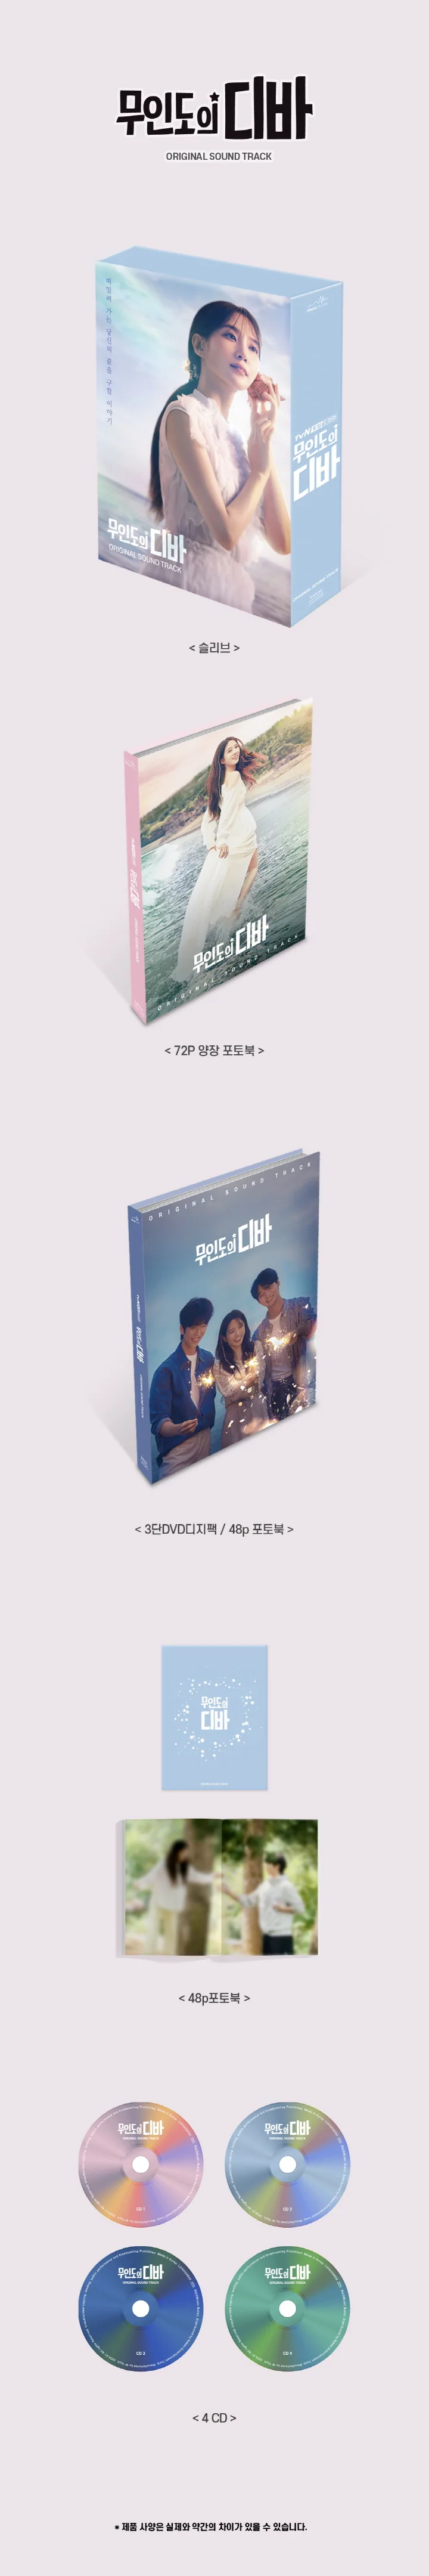 CASTAWAY DIVA / 무인도의 디바] tvN Drama OST